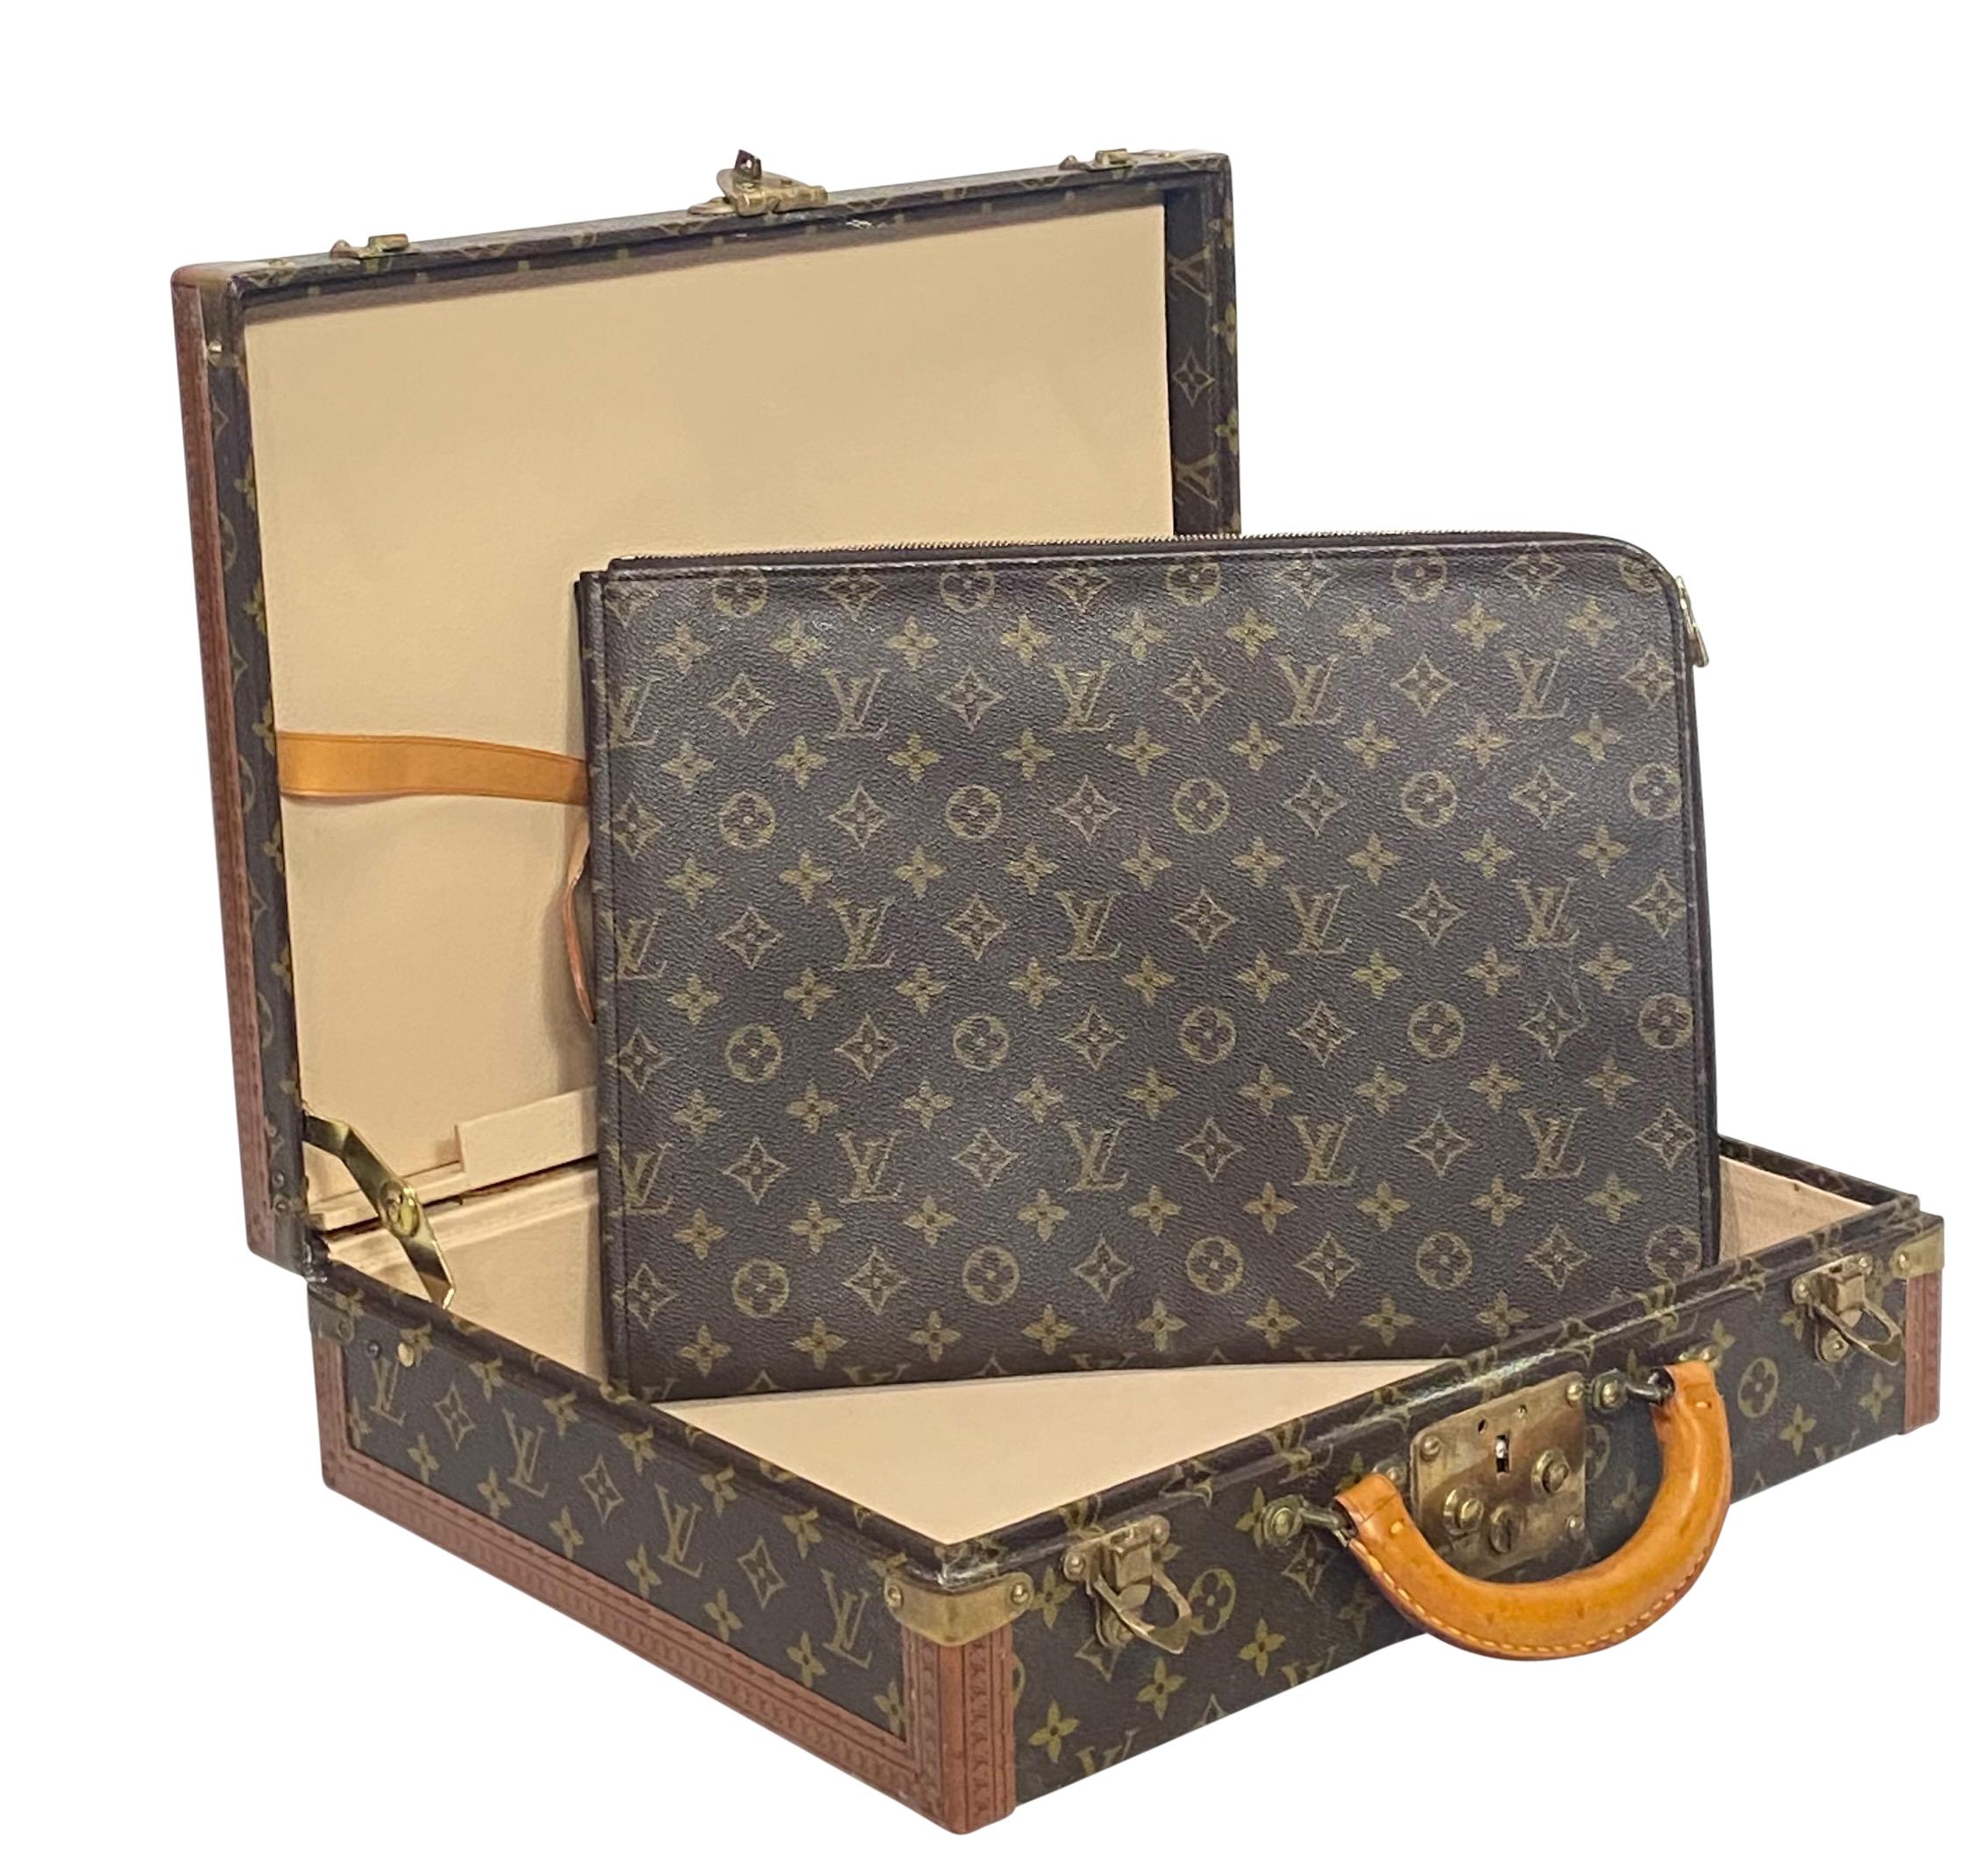 French Authentic Vintage Louis Vuitton Suitcase Valise